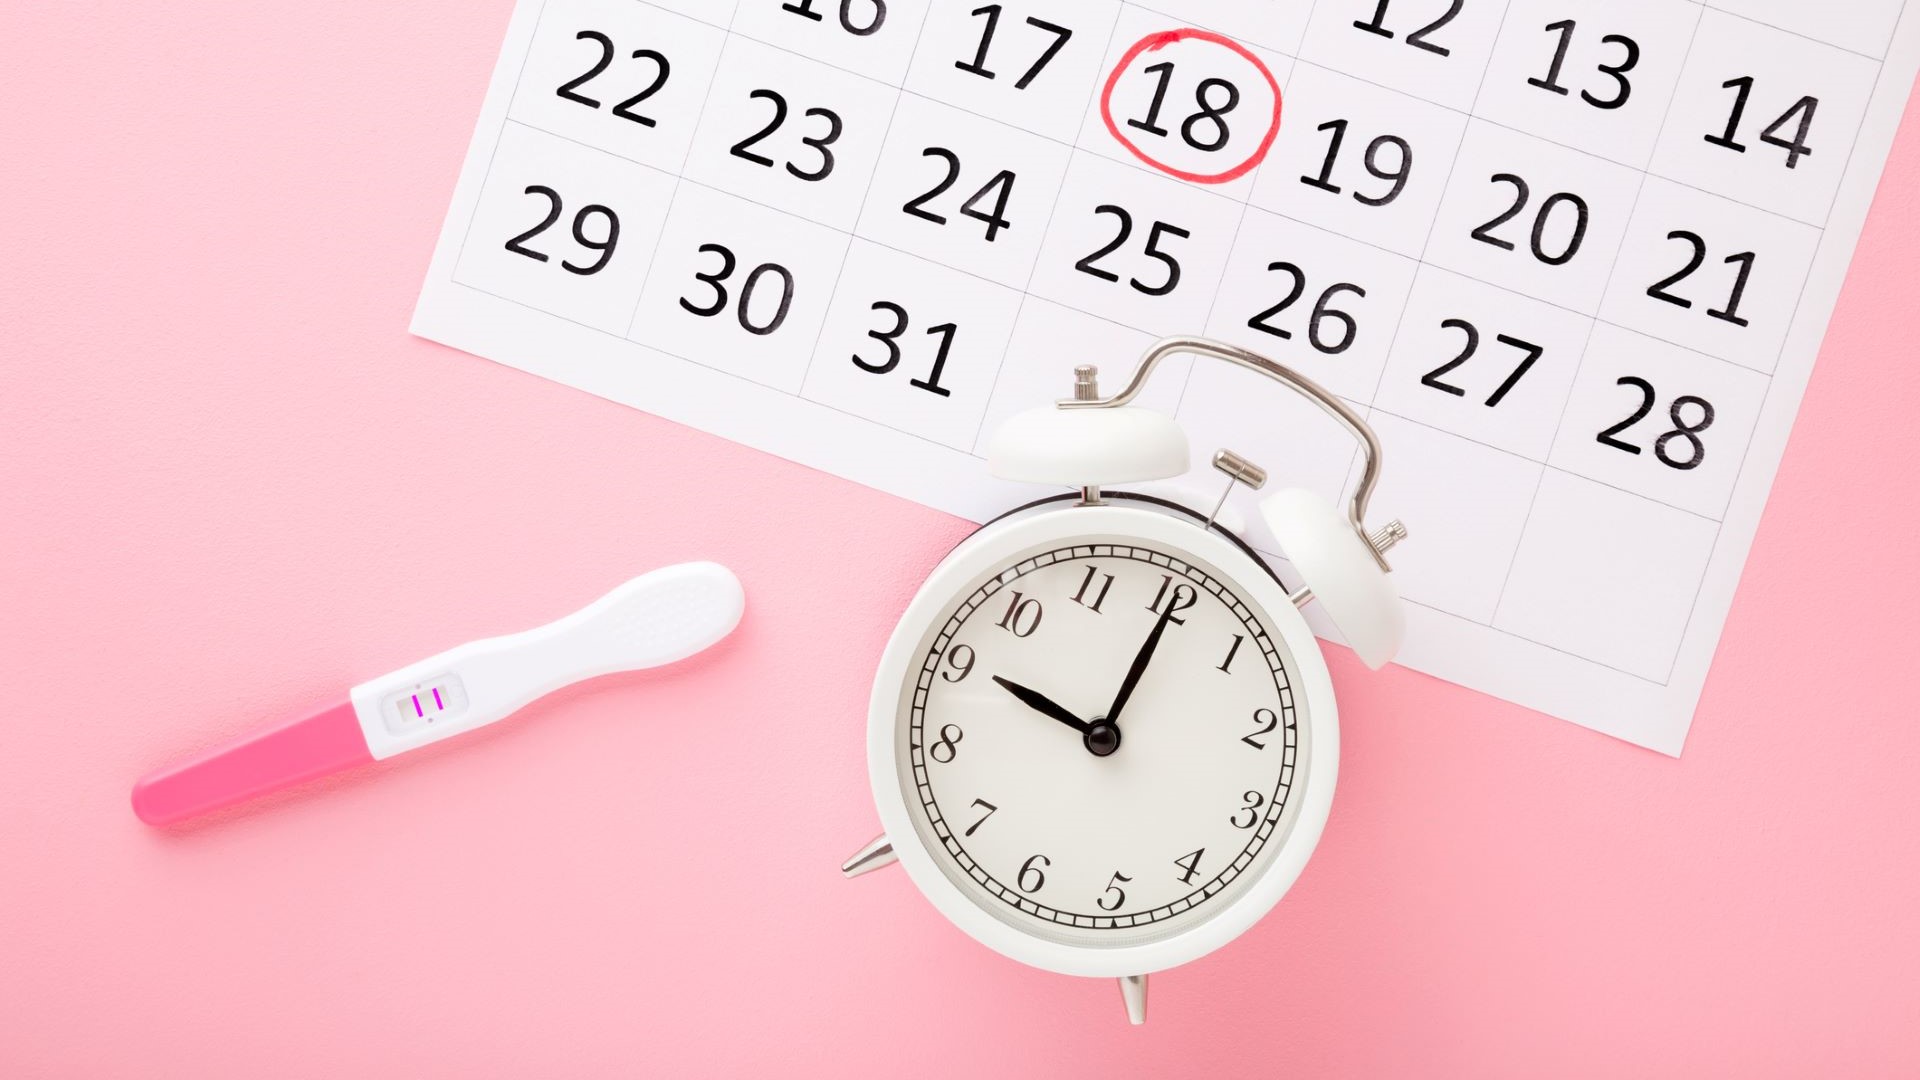 Ovulation calculator: When will I ovulate? - Good To